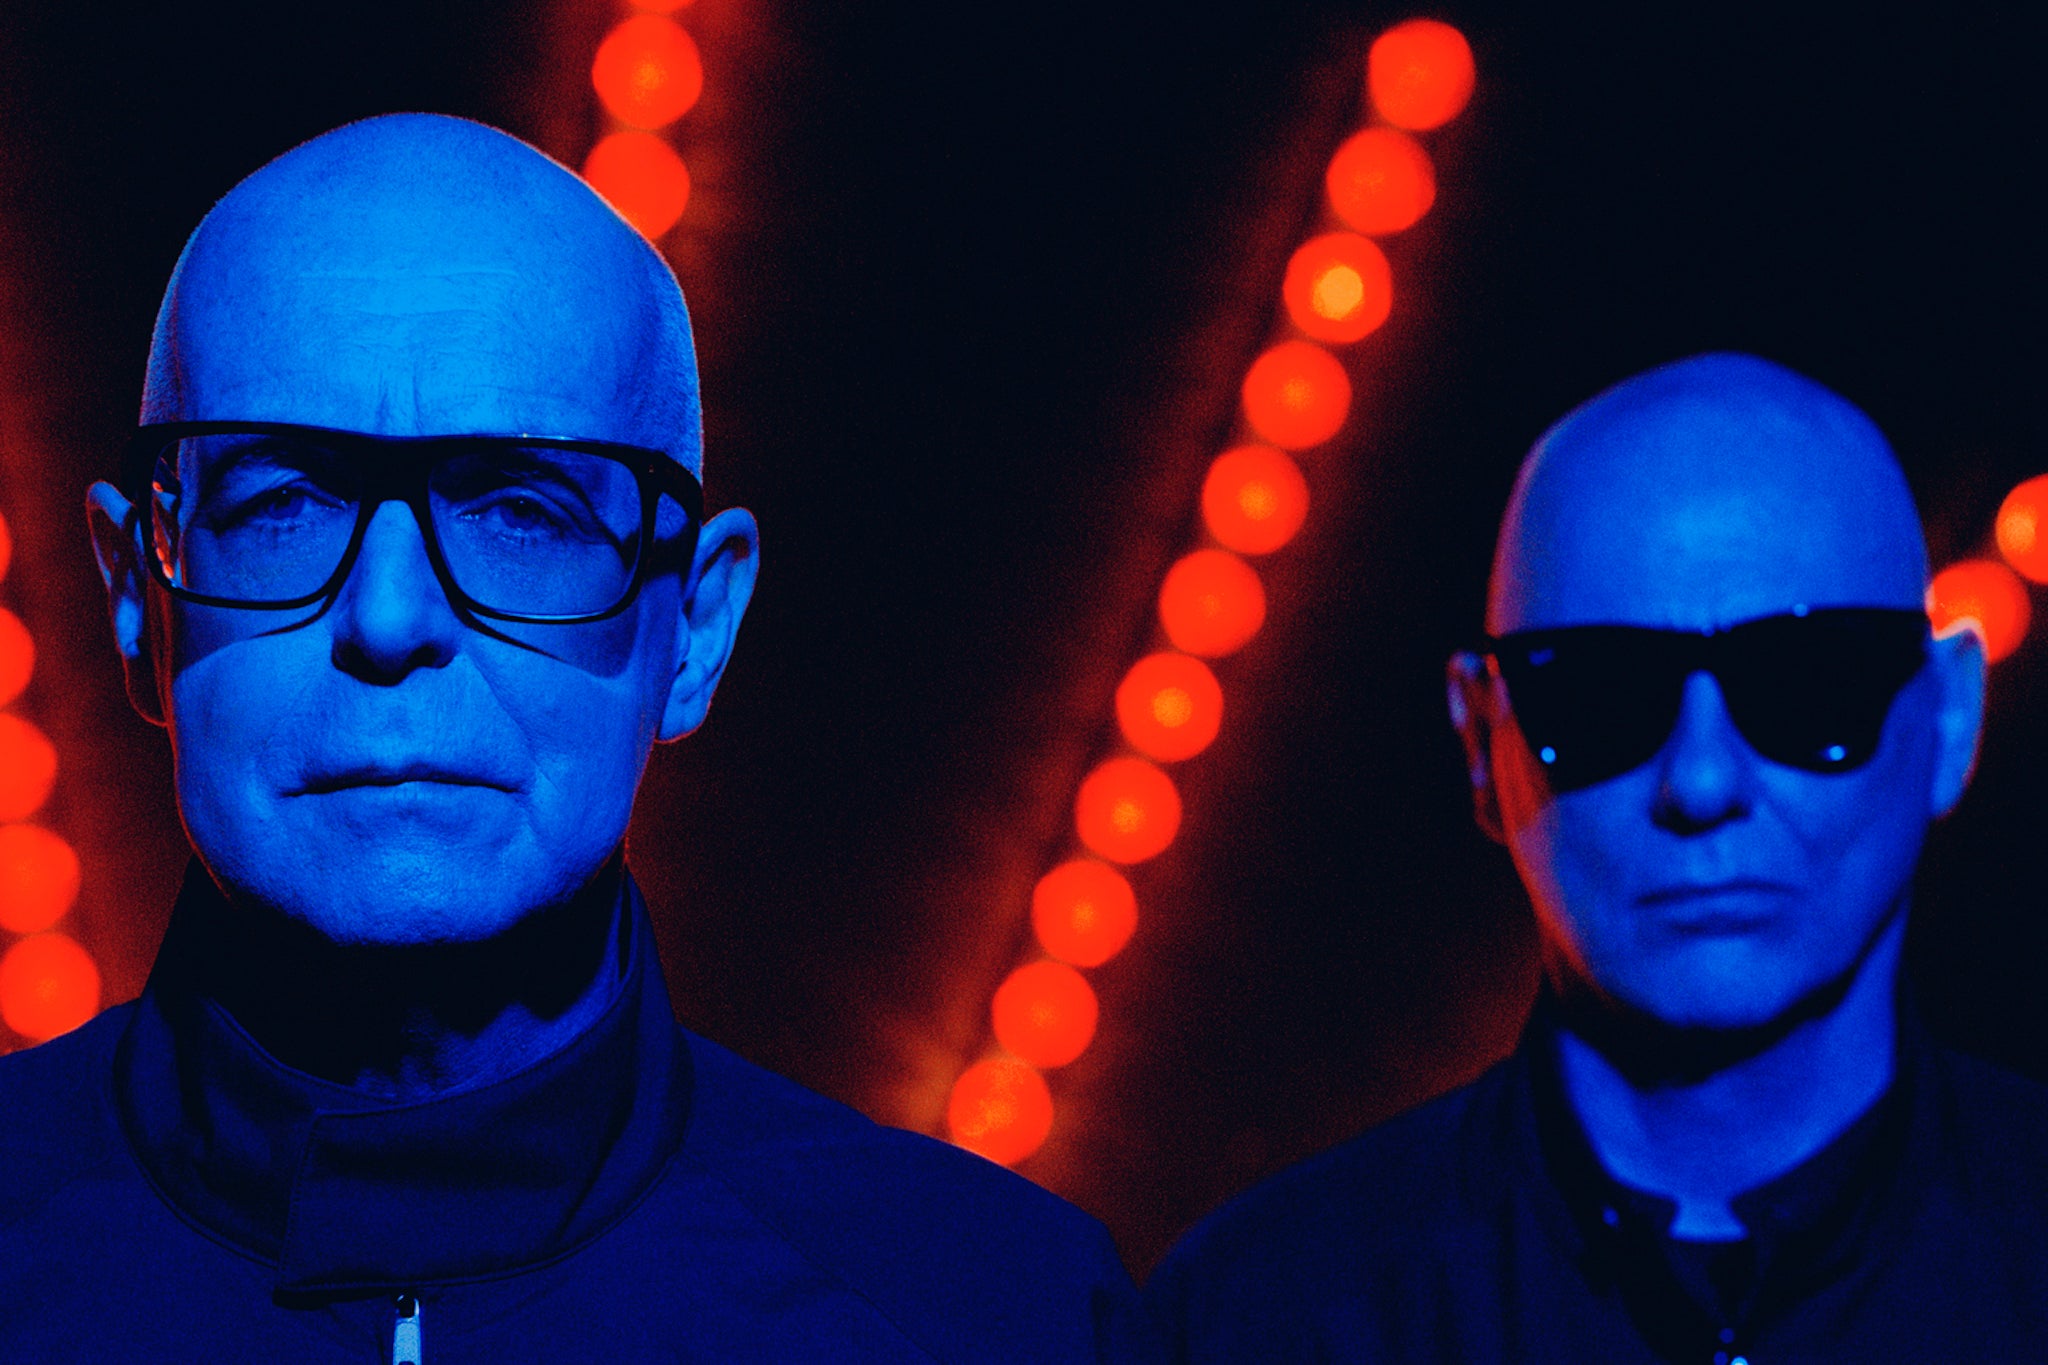 Pet Shop Boys release their 15th album ‘Nonetheless’ on 26 April